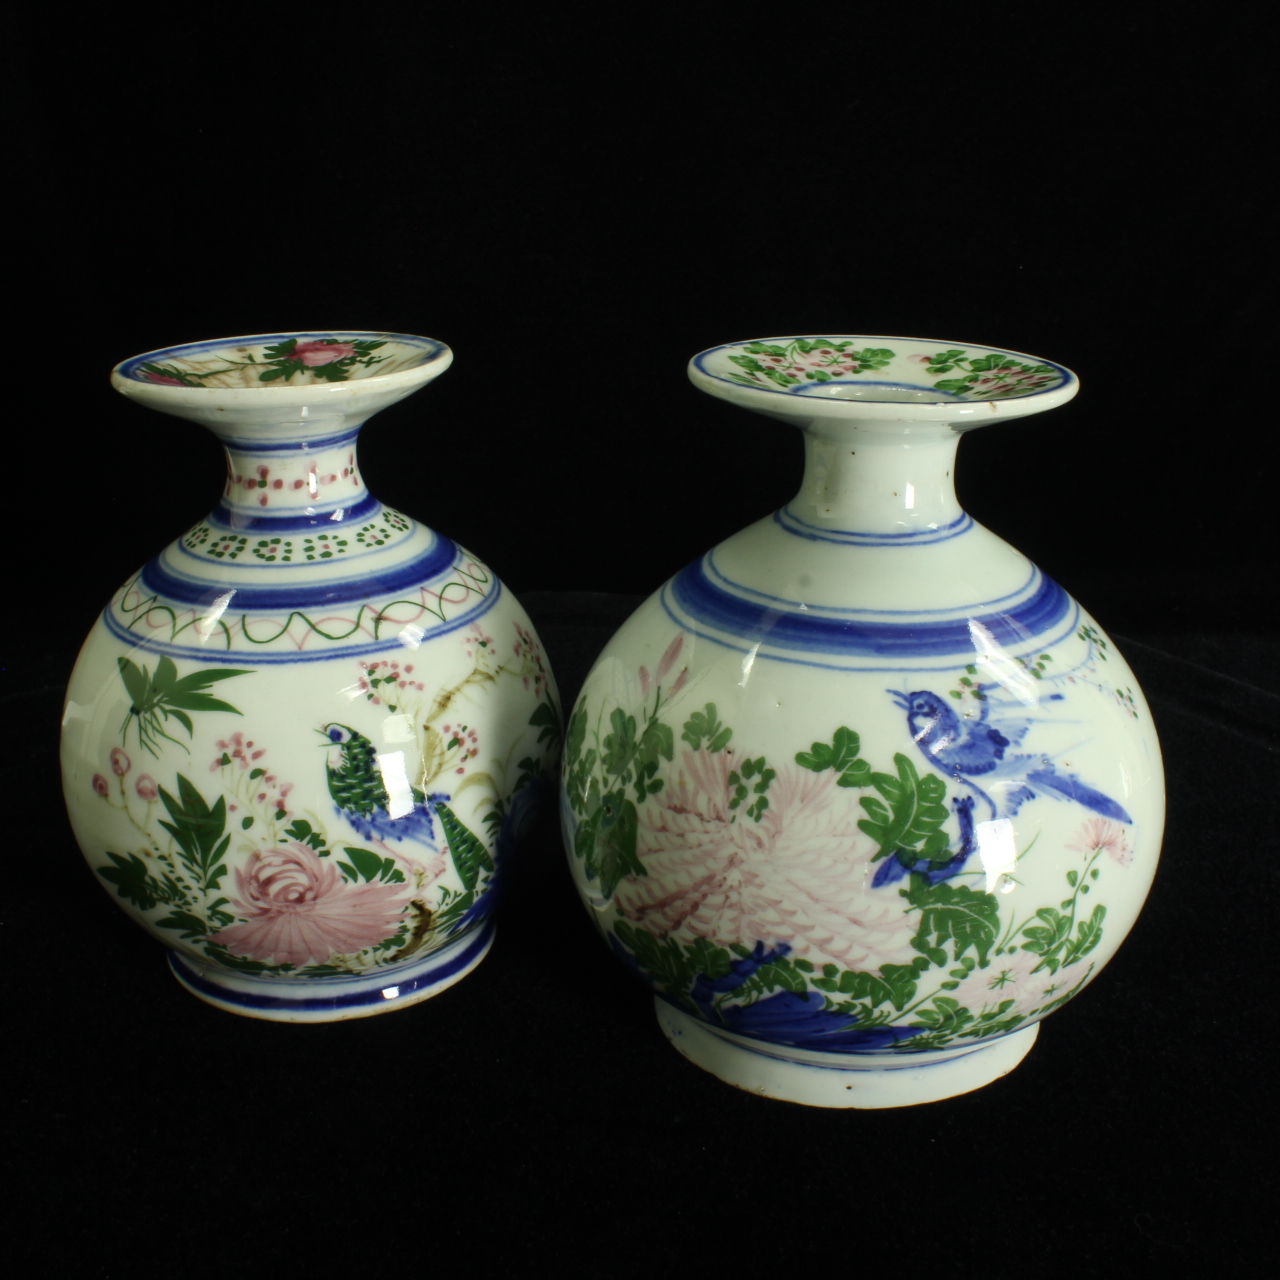 Pair of Qing Dynasty Bottle Vases